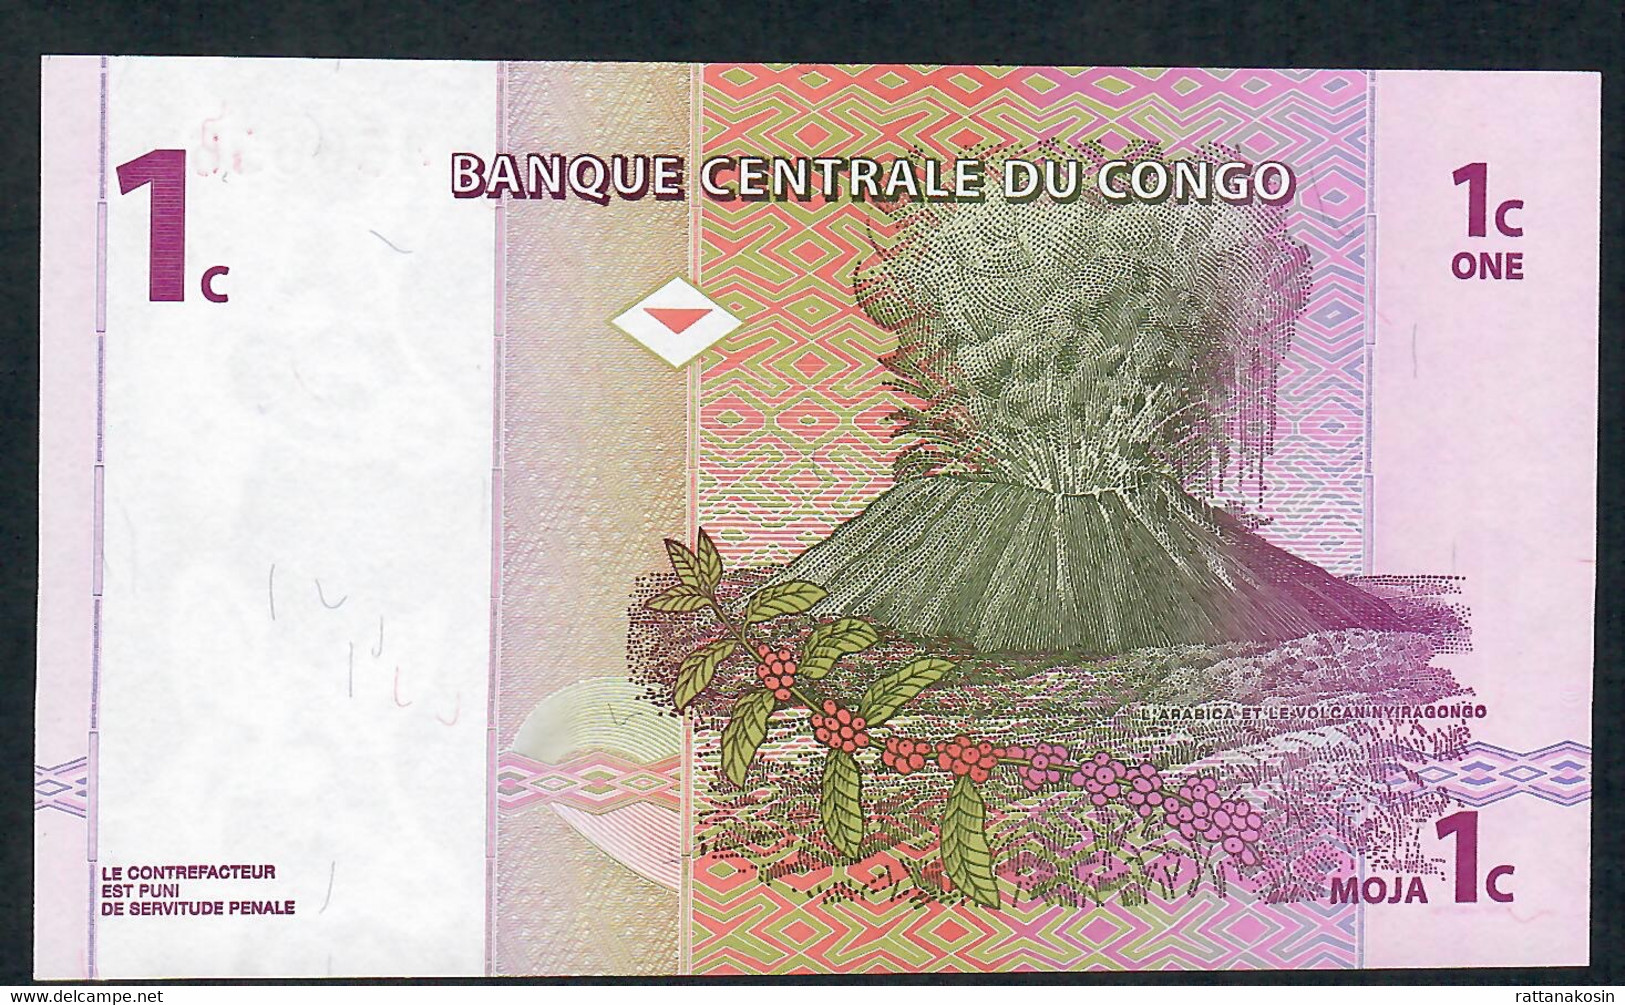 CONGO  D.R. P80 1 CENTIME 1997 #A/A      UNC. - Ohne Zuordnung